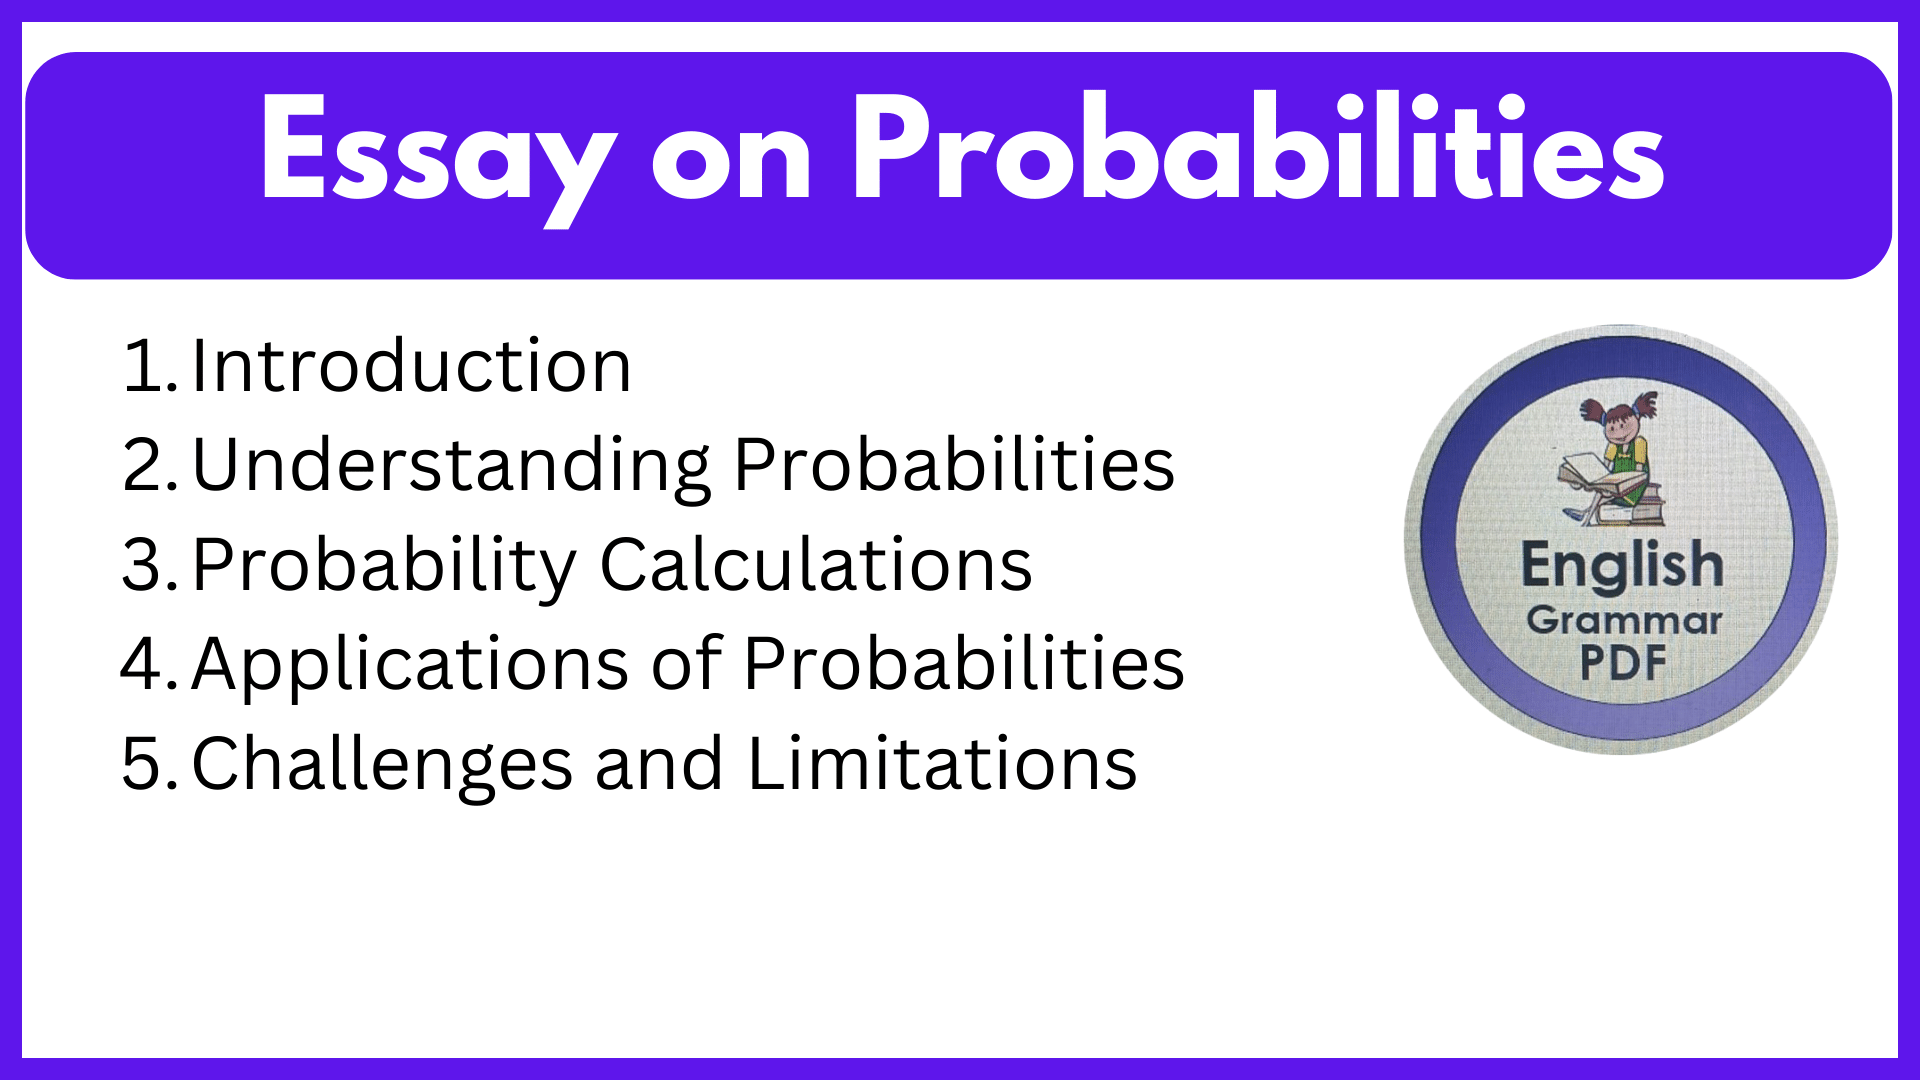 Essay on Probabilities